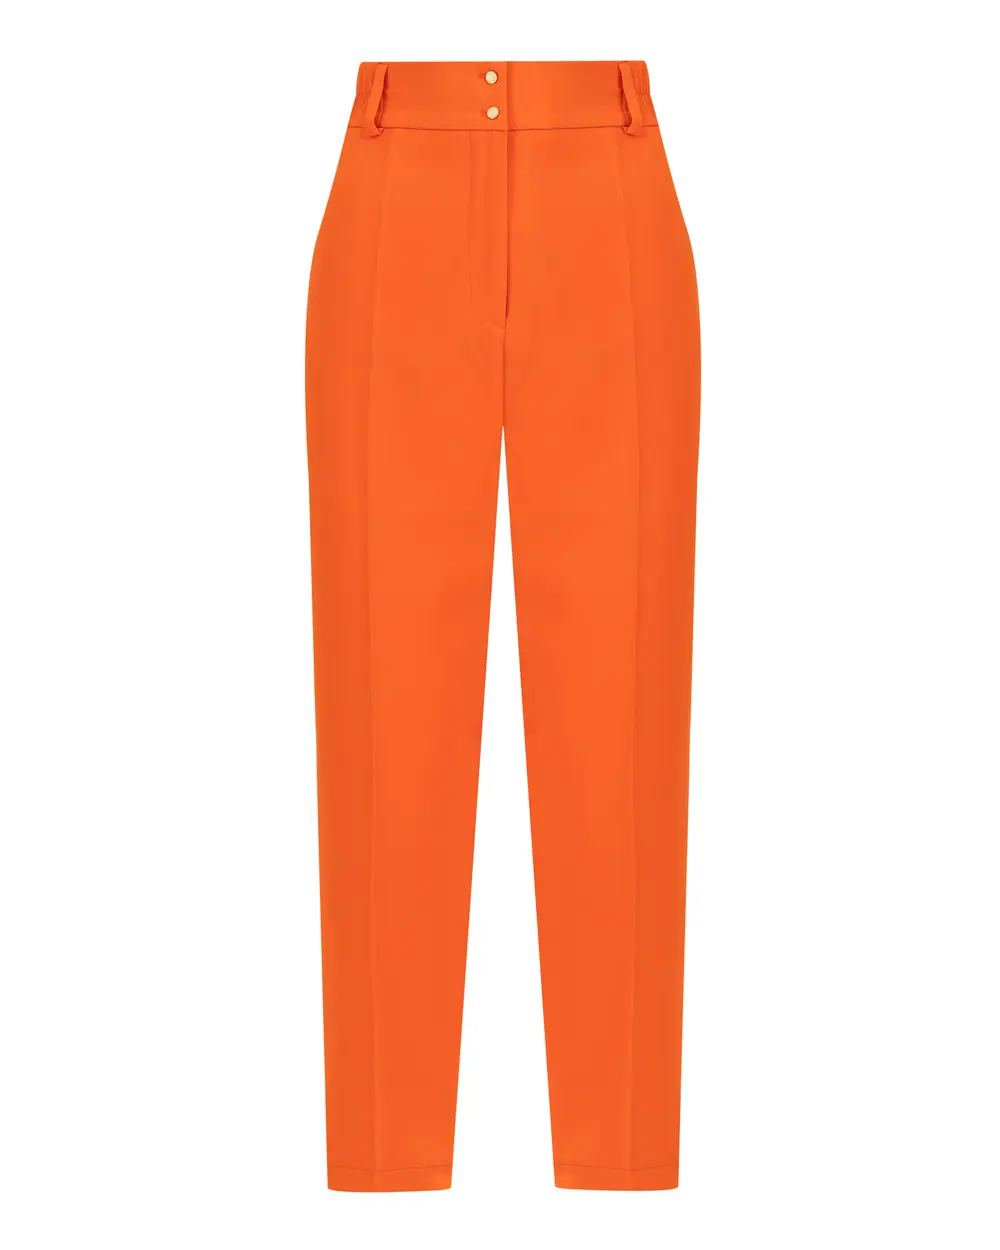 Half Elastic Waist Carrot Cut Ankle Length Trousers